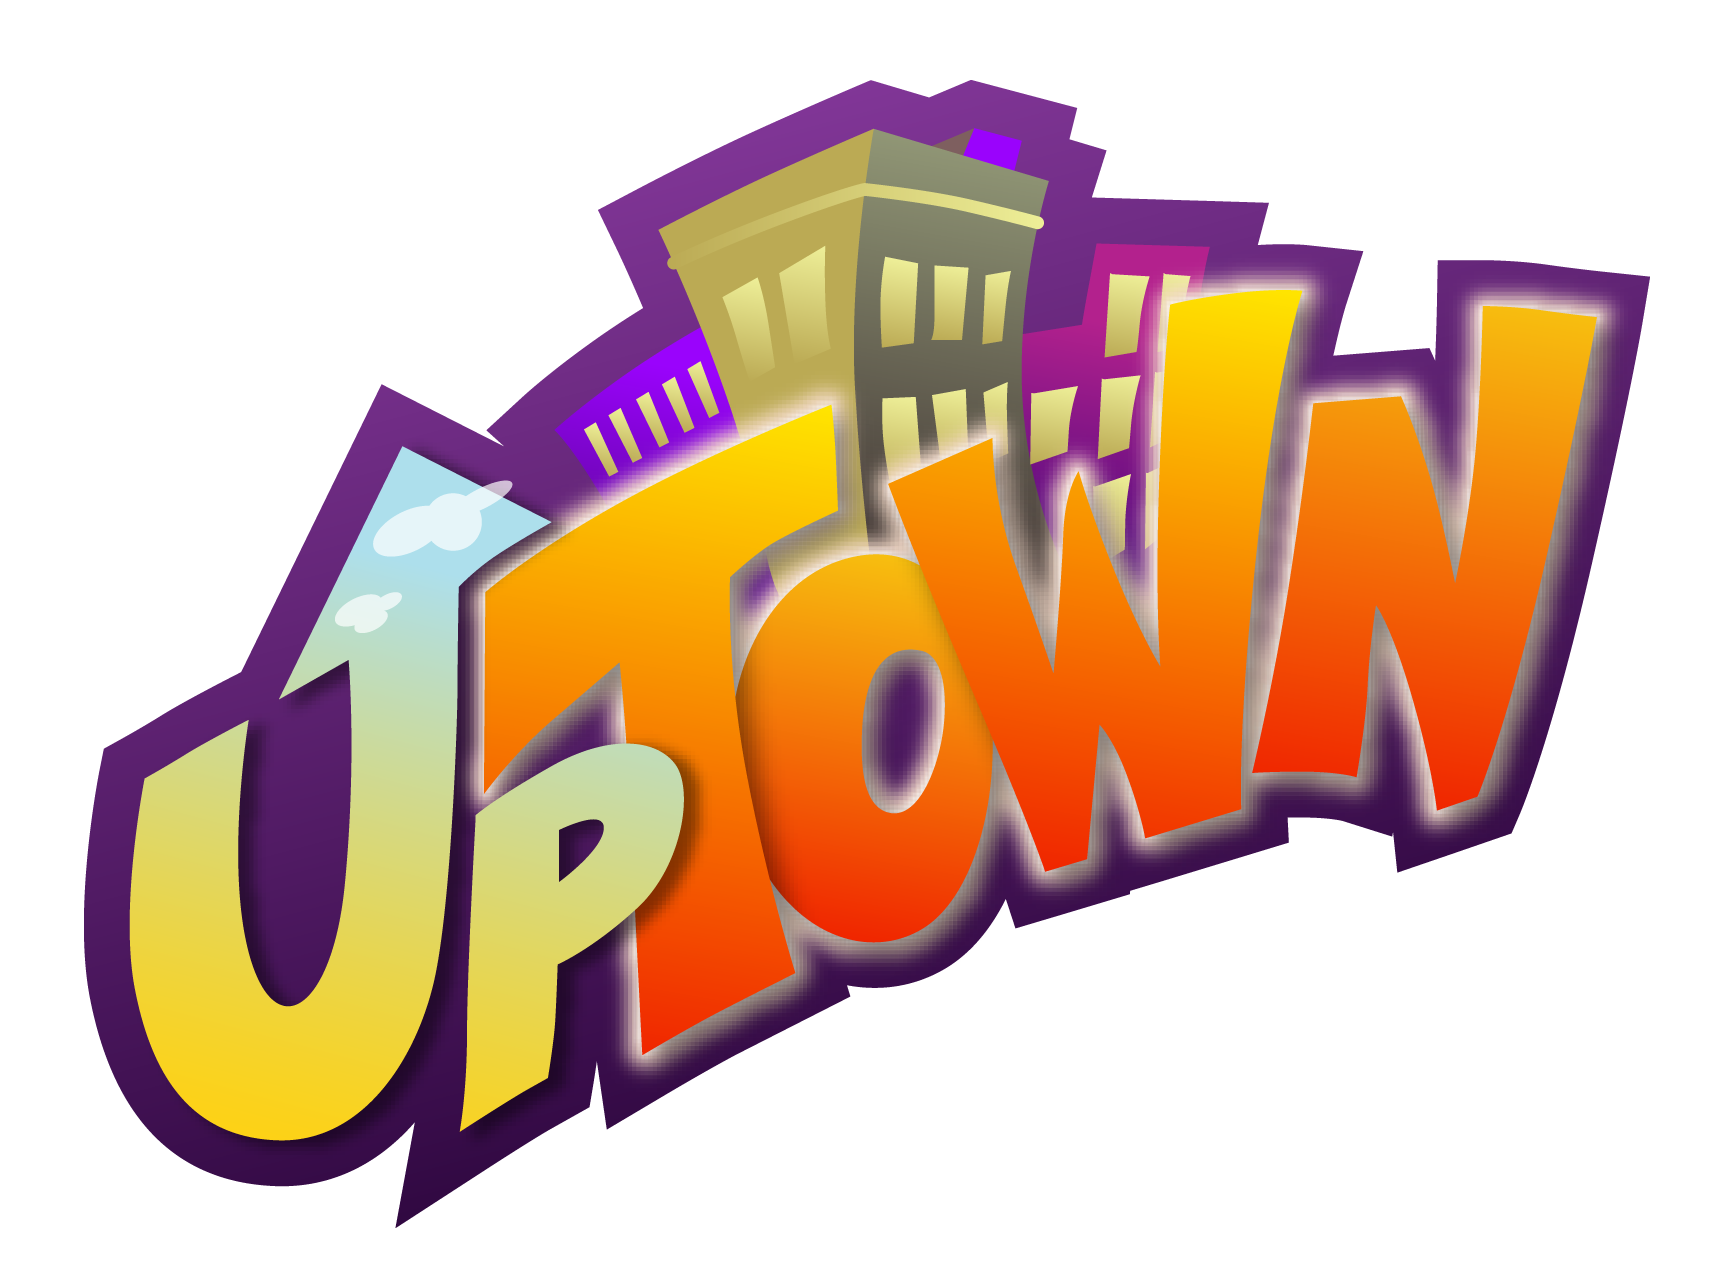 uptown funk download free